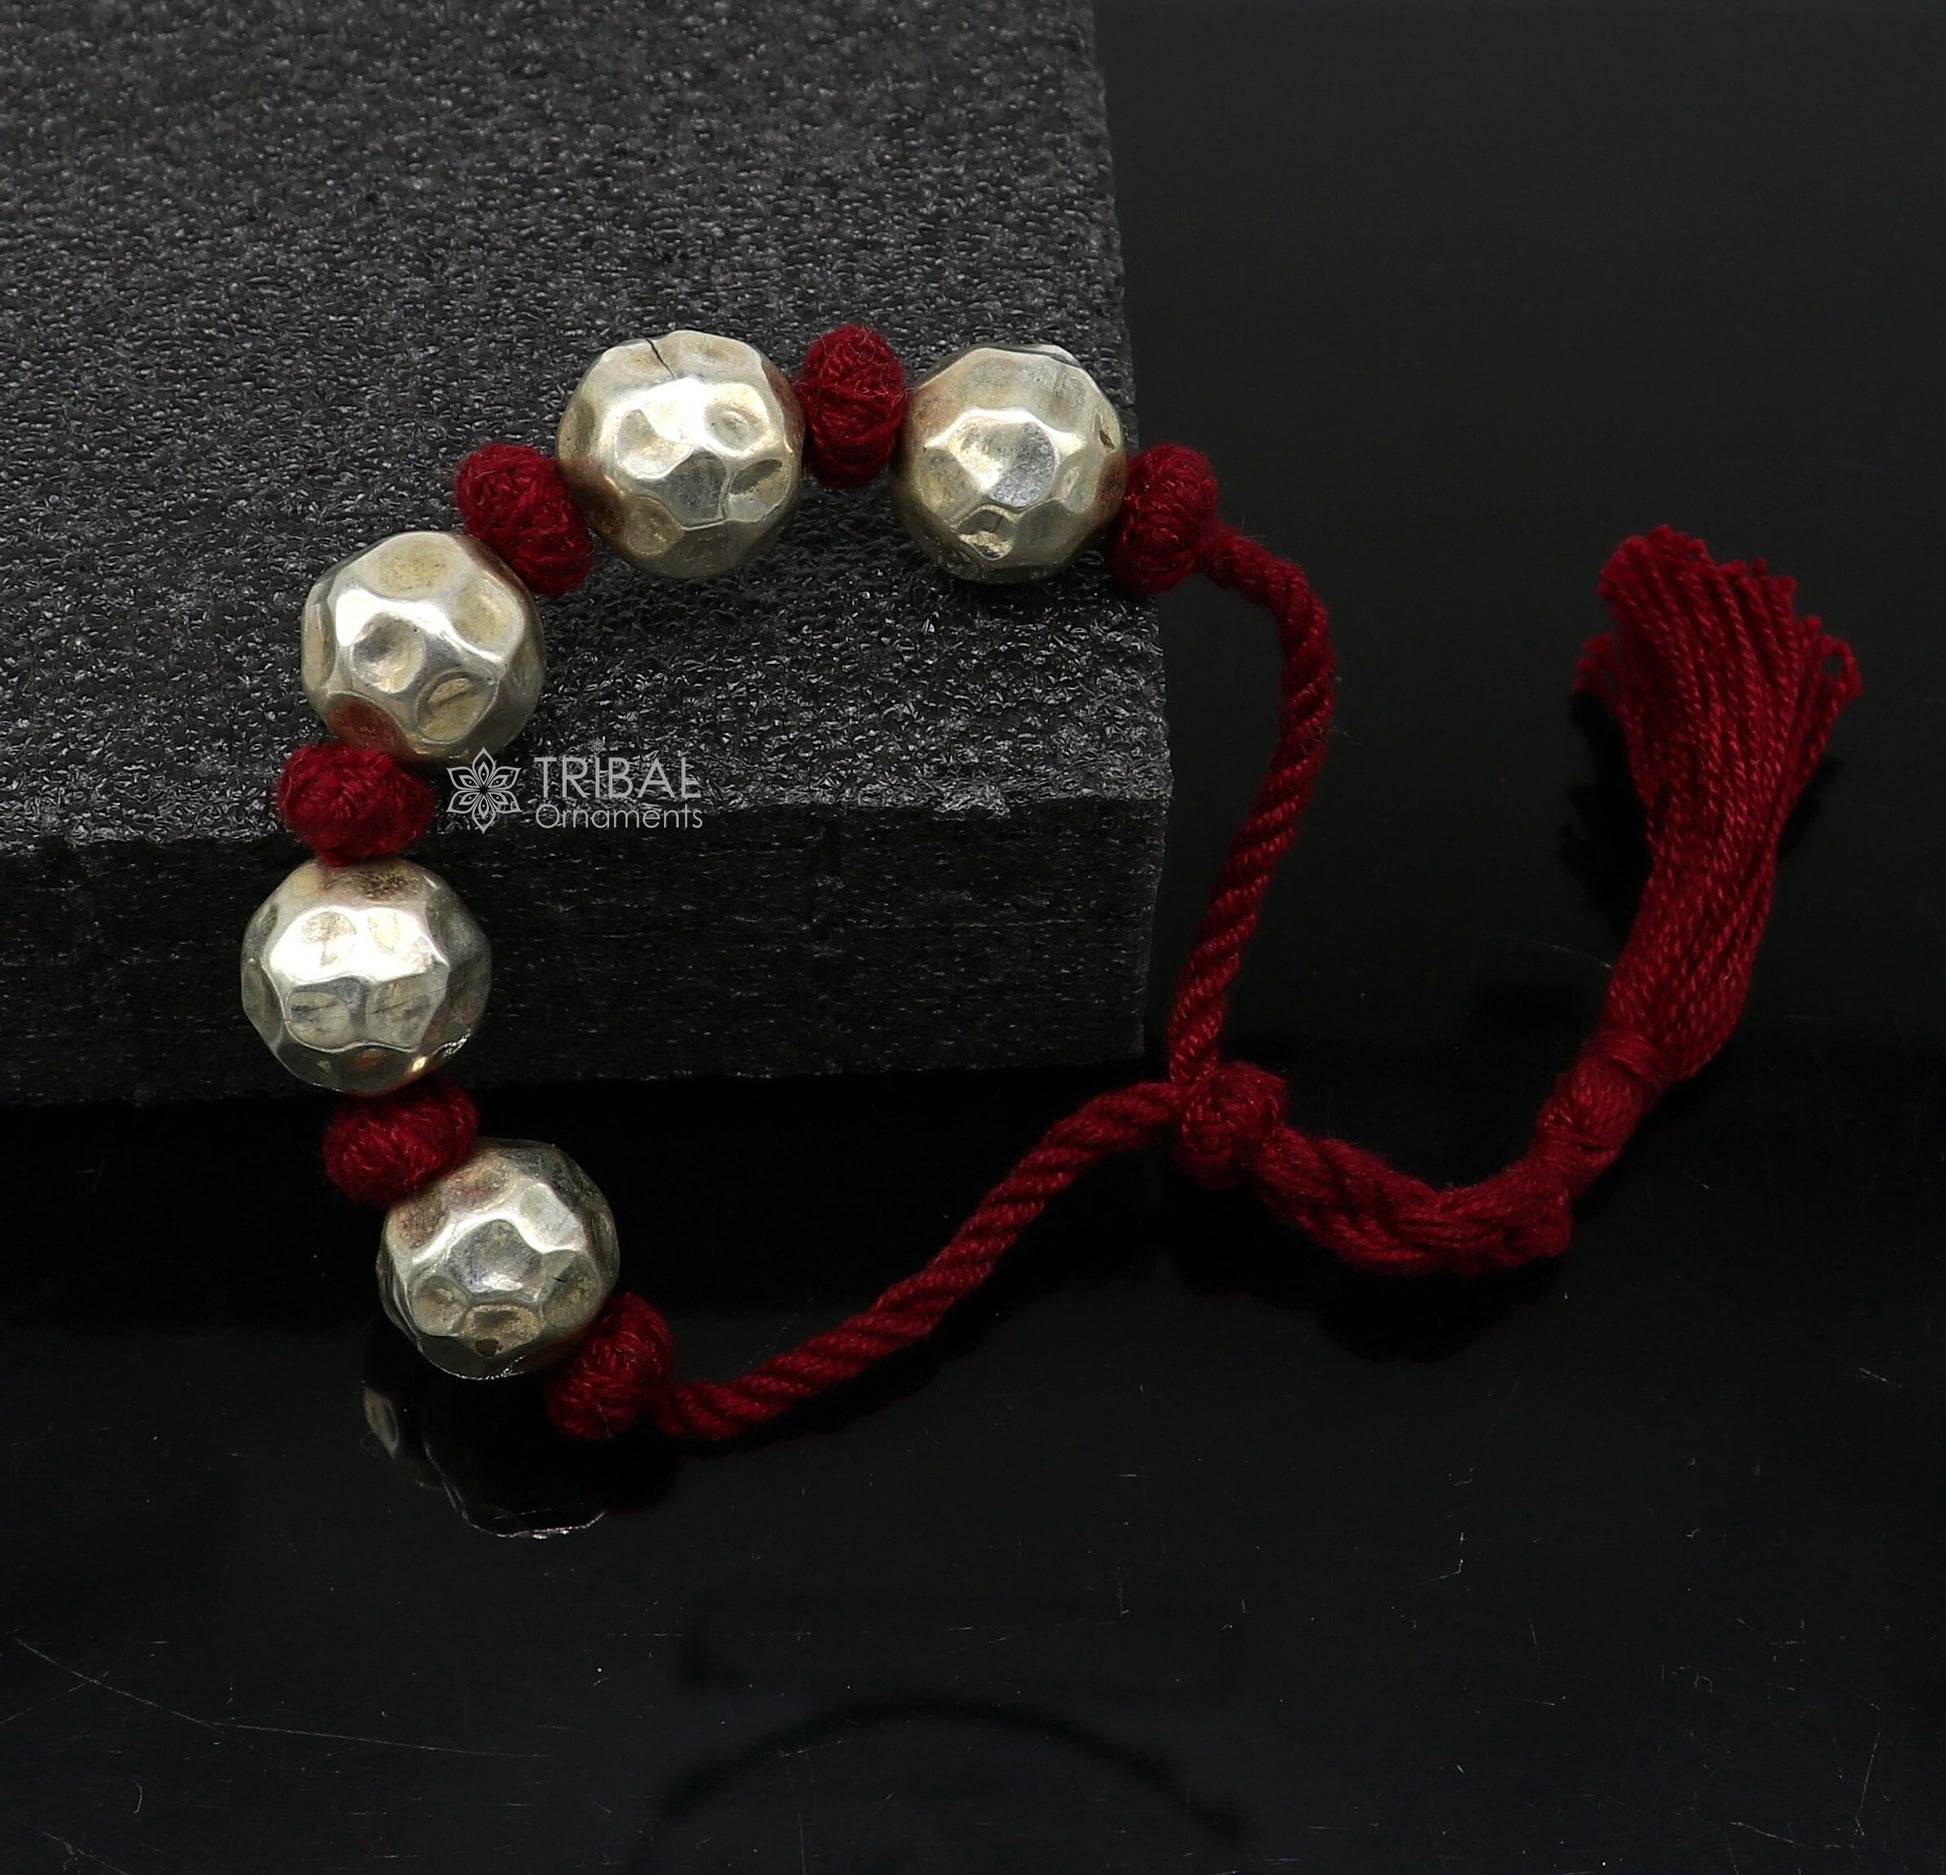 925 sterling silver vintage customized stylish beads bracelet, adjustable brides gifting wedding ethnic bracelet tribal jewelry sbr684 - TRIBAL ORNAMENTS